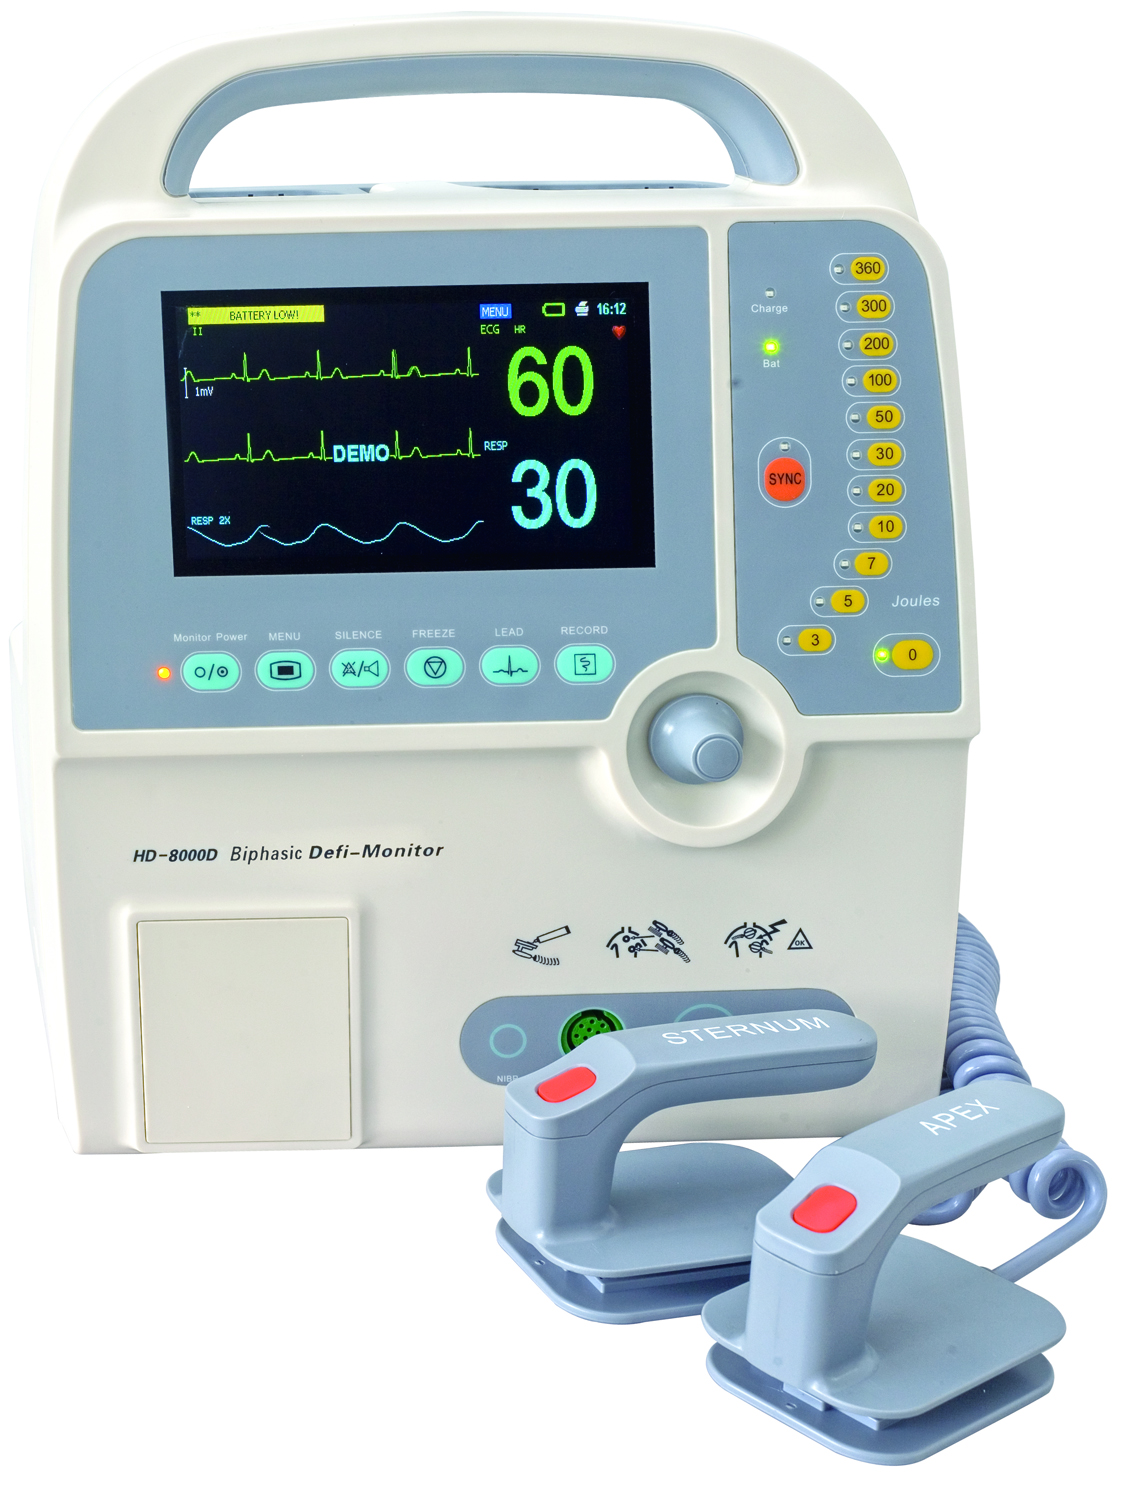 LG-HD8000D Defibrillator for Medical Use